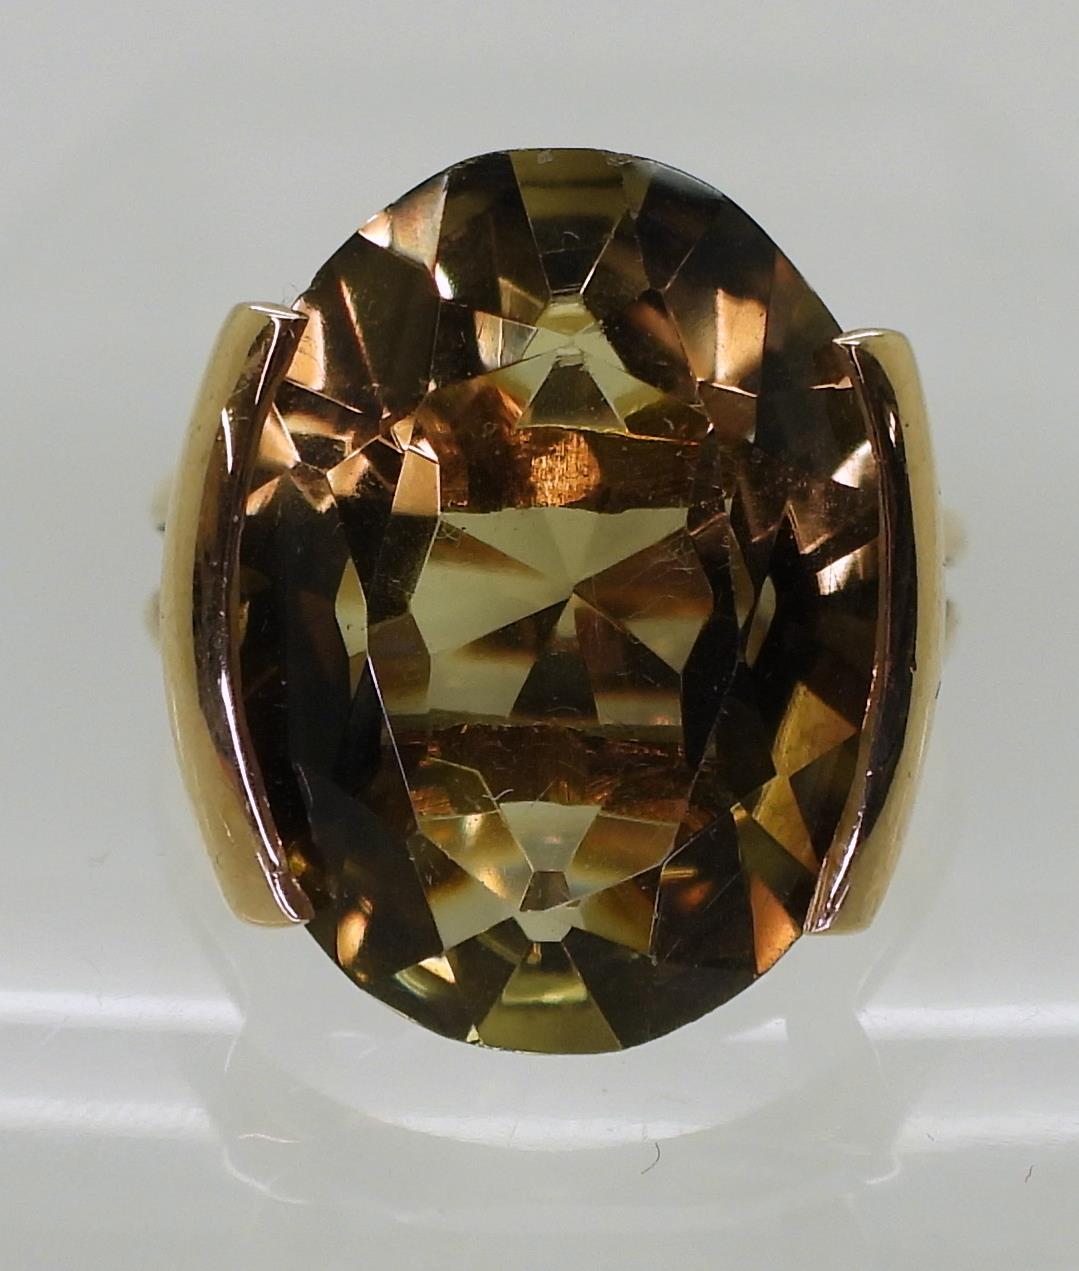 A 9ct gold smoky quartz retro ring, Edinburgh hallmarks for 1978, finger size O1/2, weight 6.6gms - Image 3 of 5